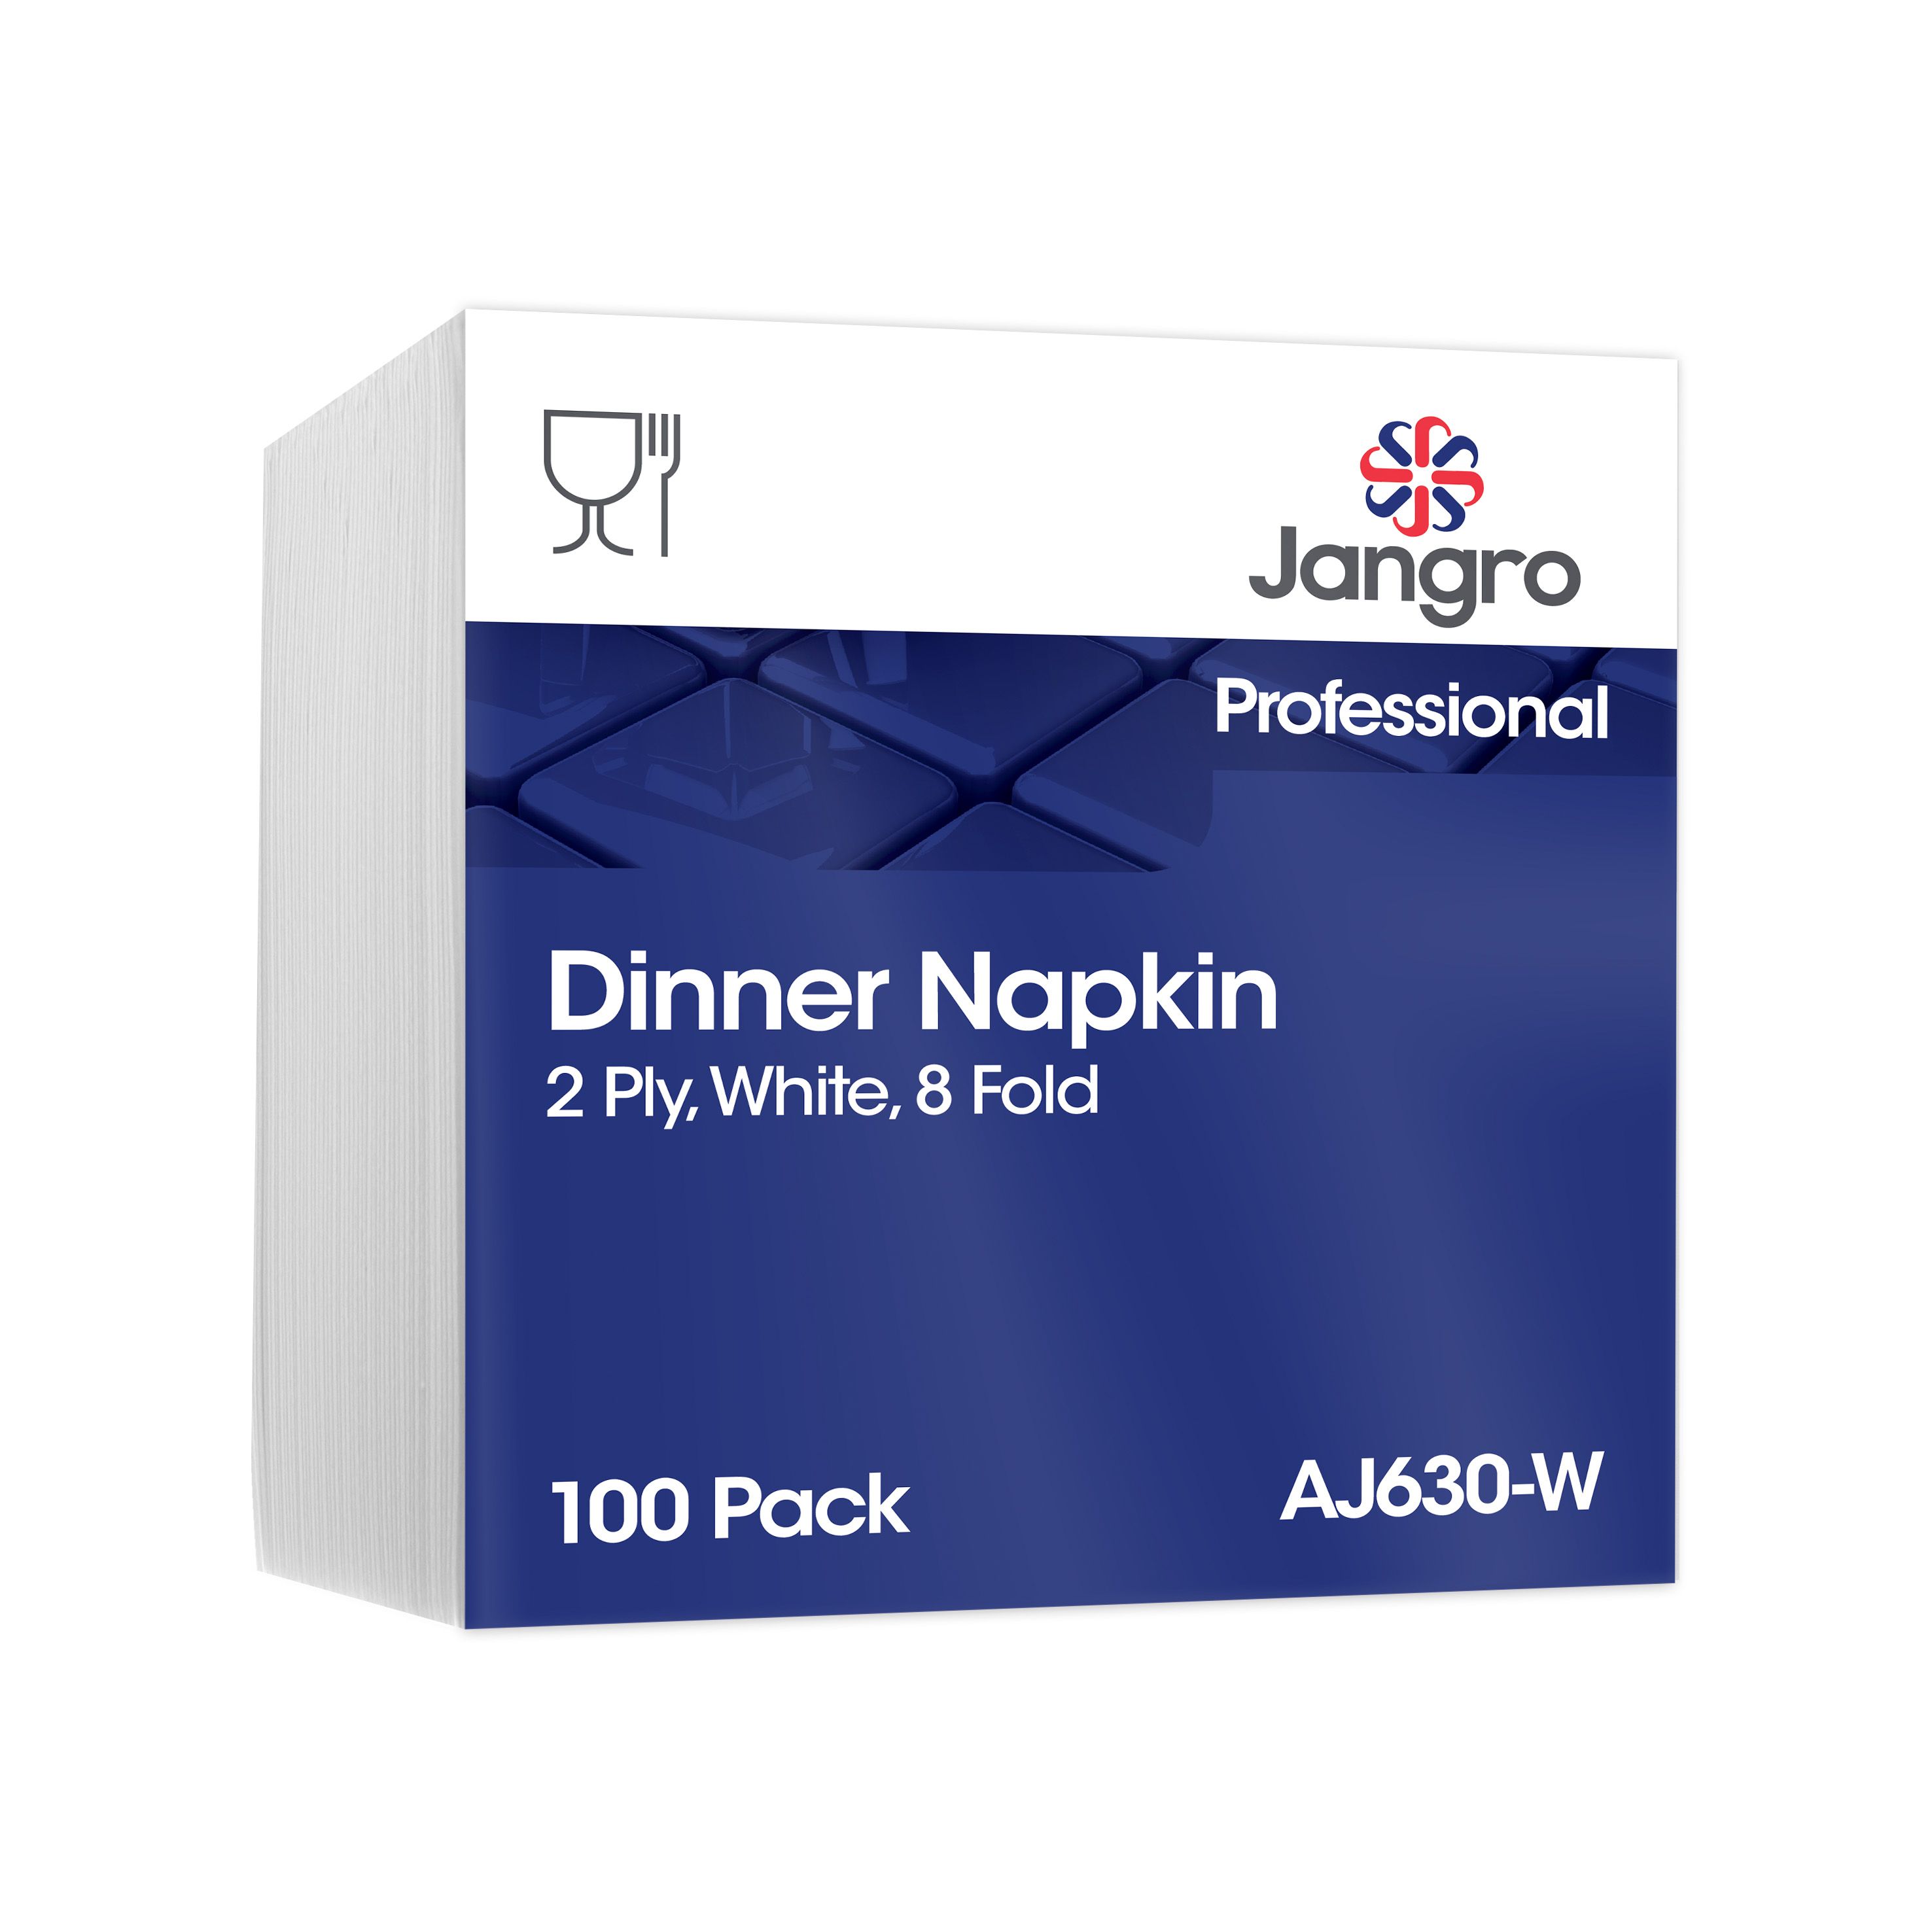 Professional Dinner Napkin 8-fold White